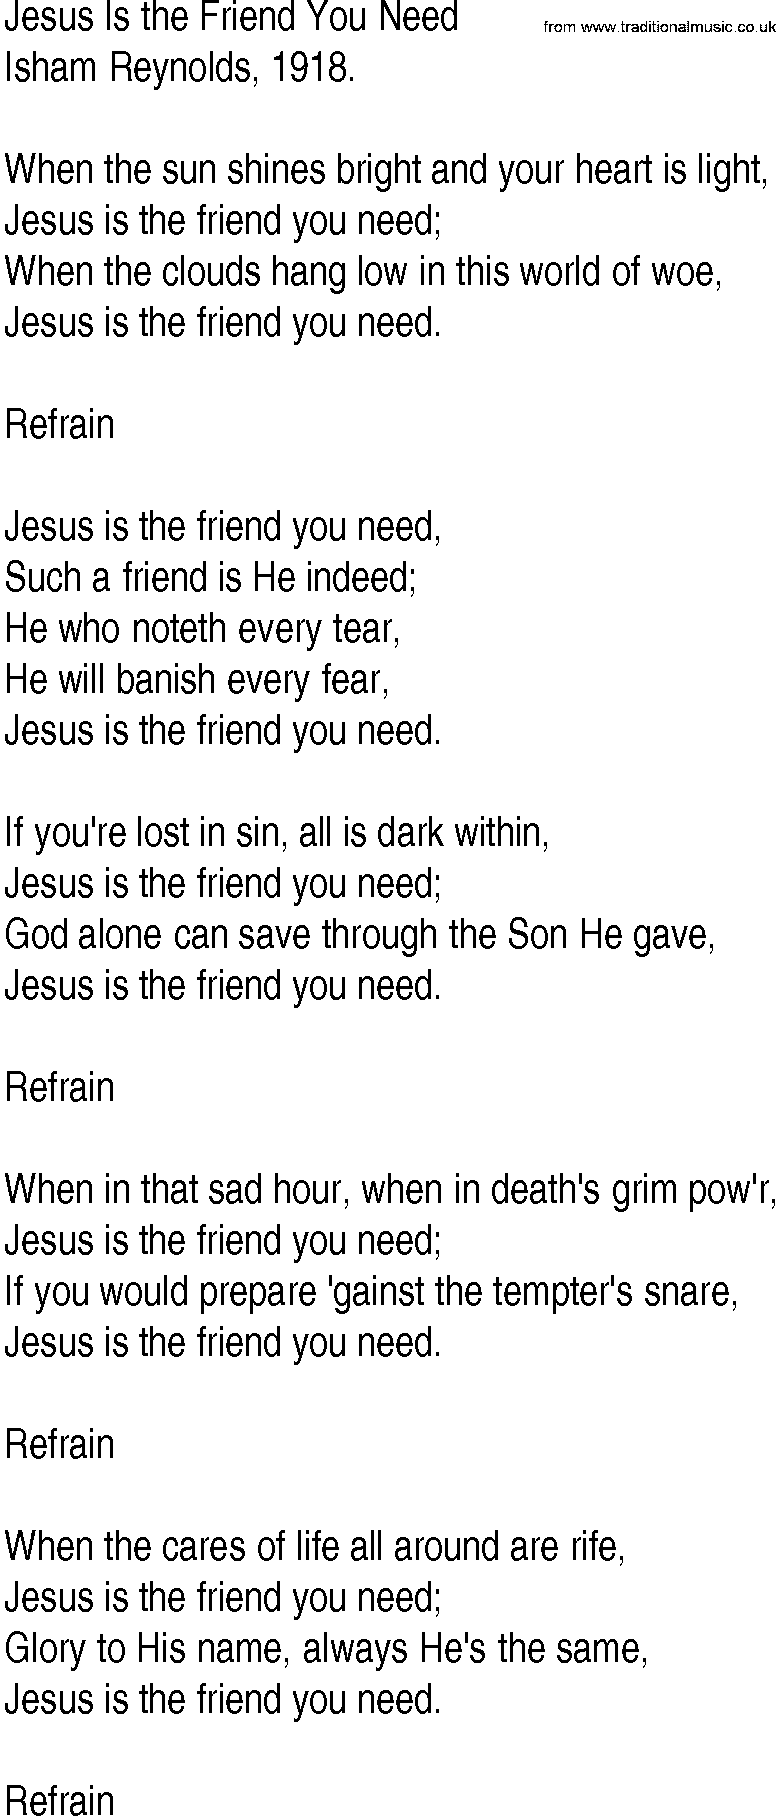 Hymn and Gospel Song: Jesus Is the Friend You Need by Isham Reynolds lyrics